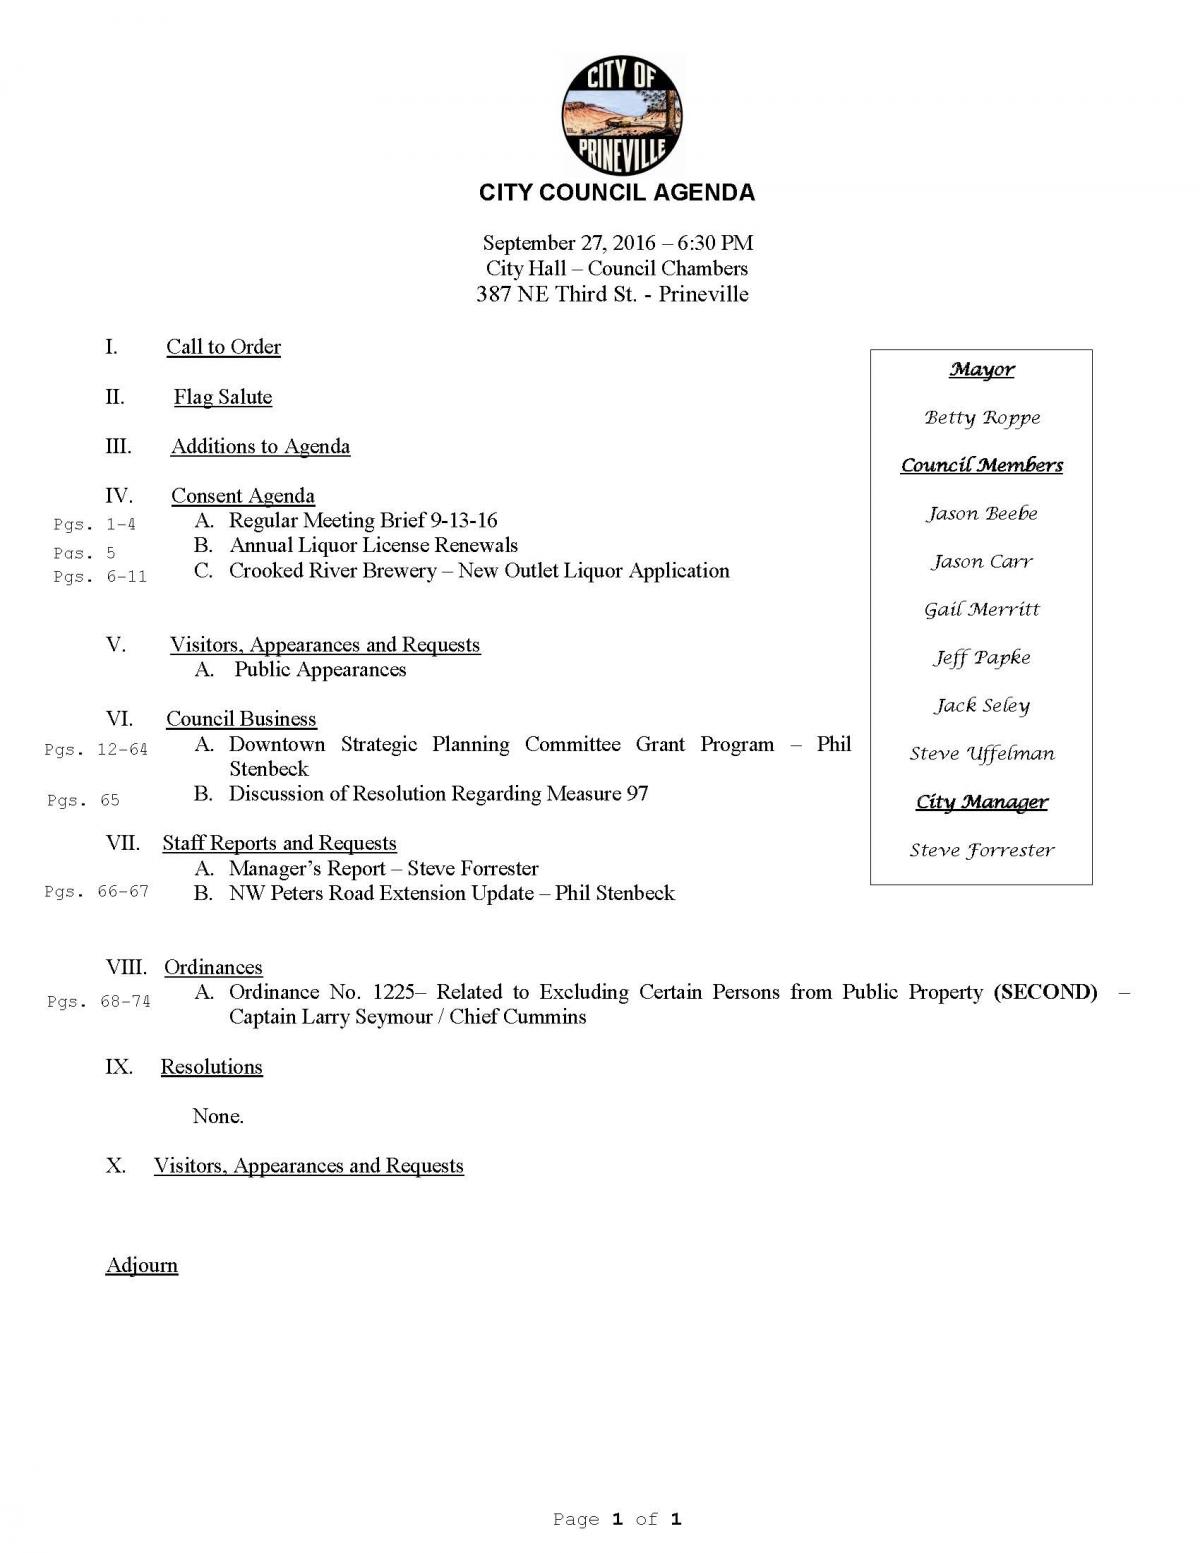 Council Agenda 9-27-16